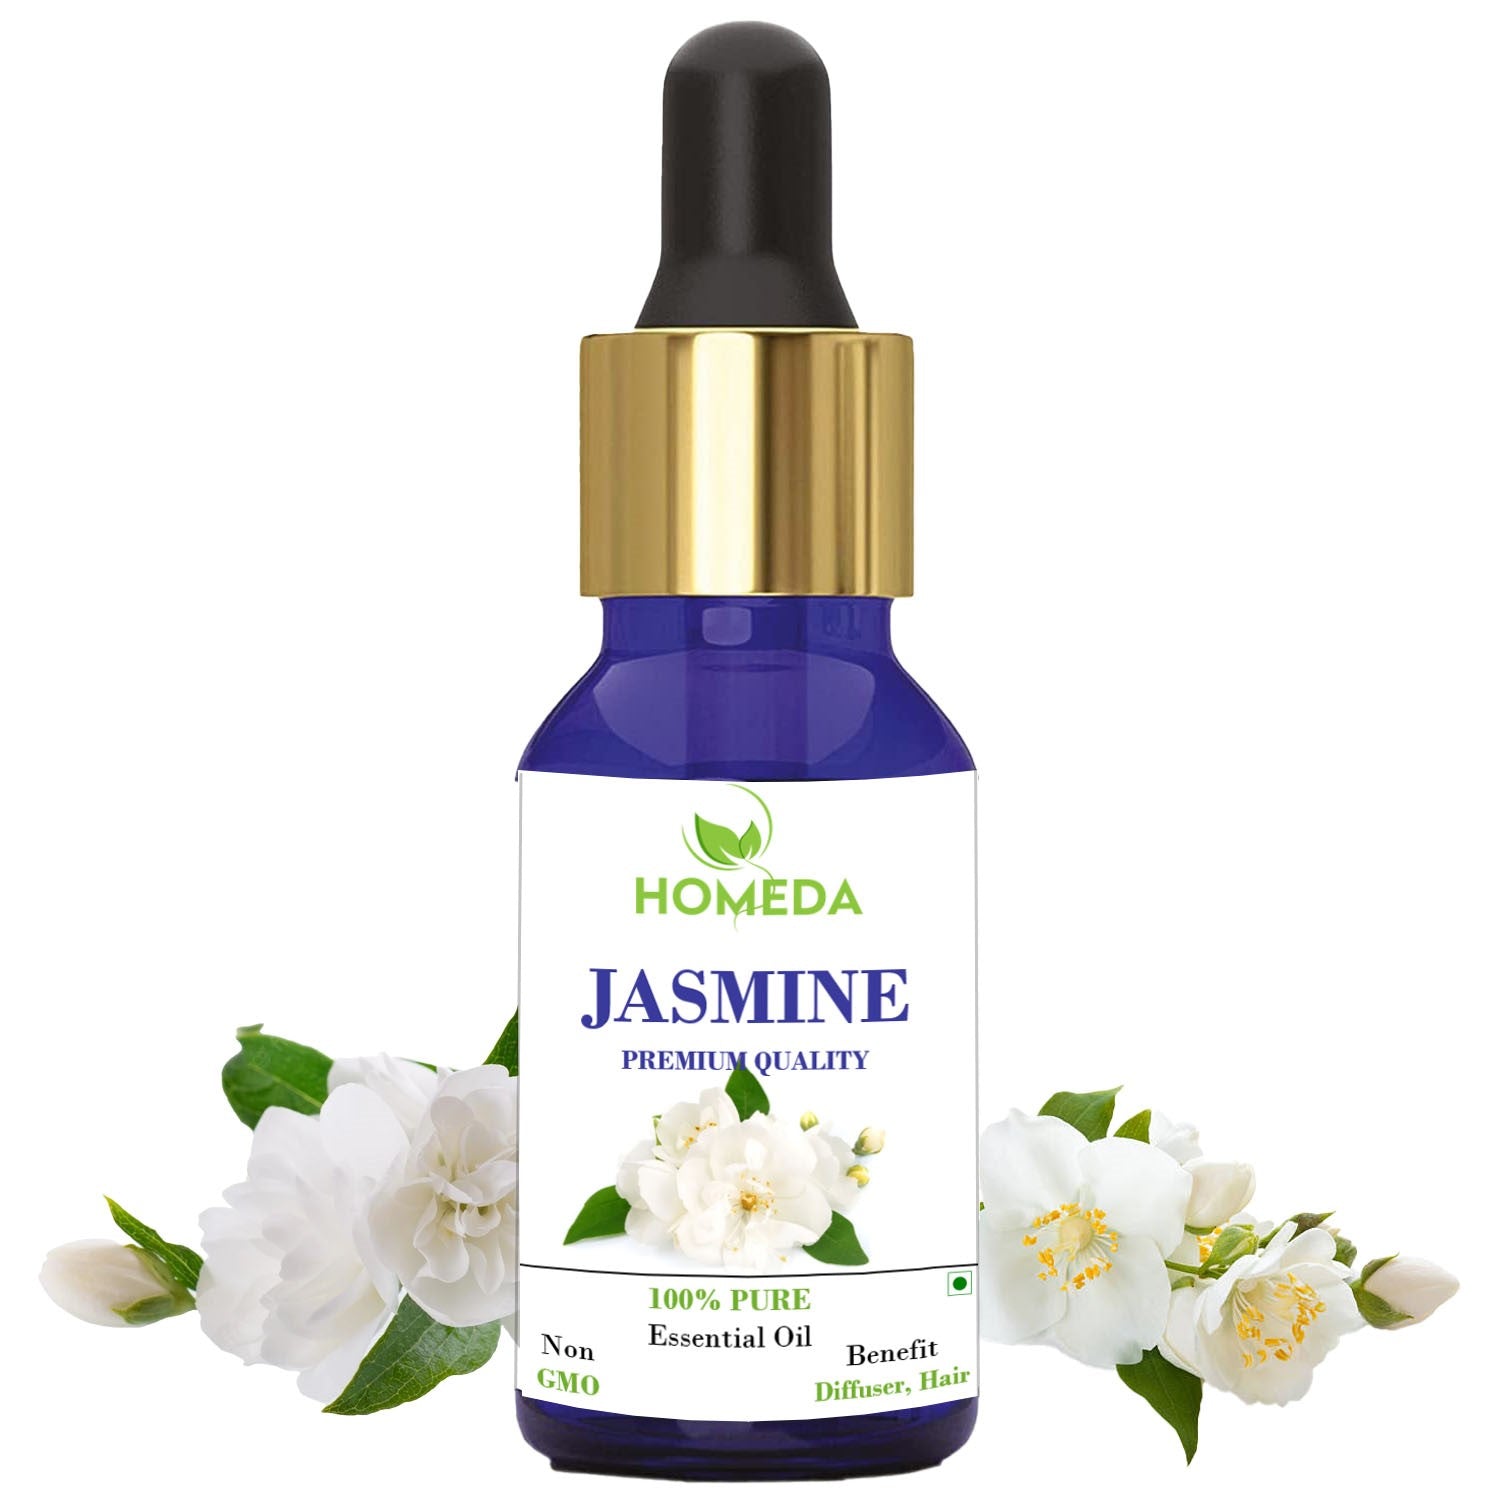 Jasmine Aroma diffuser